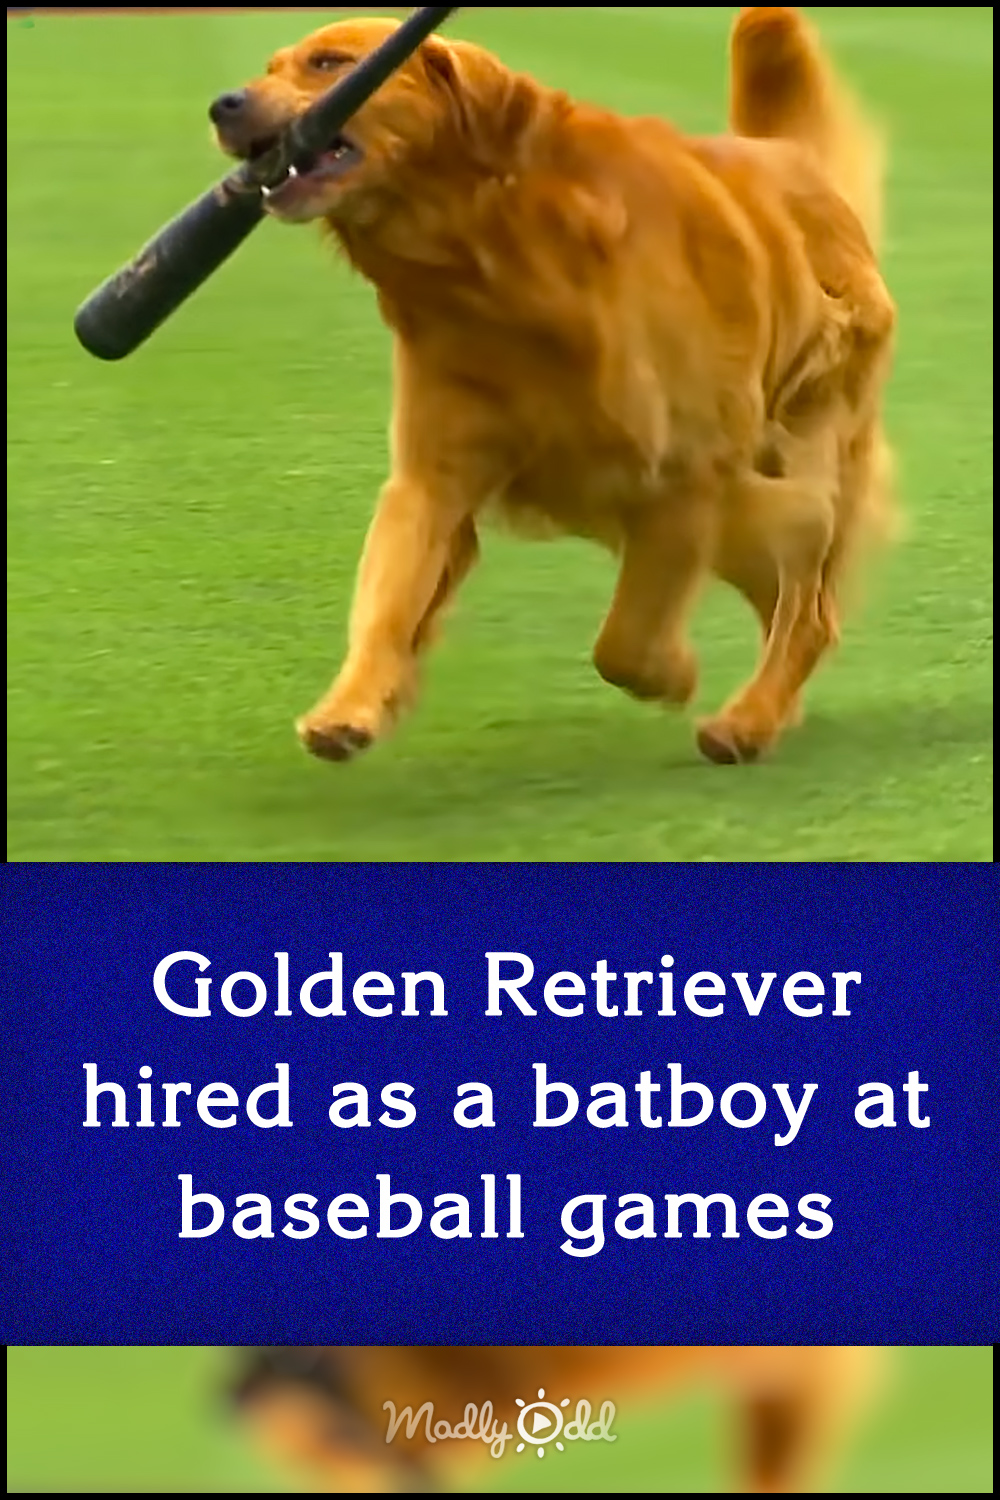 Golden Retriever hired as a batboy at baseball games